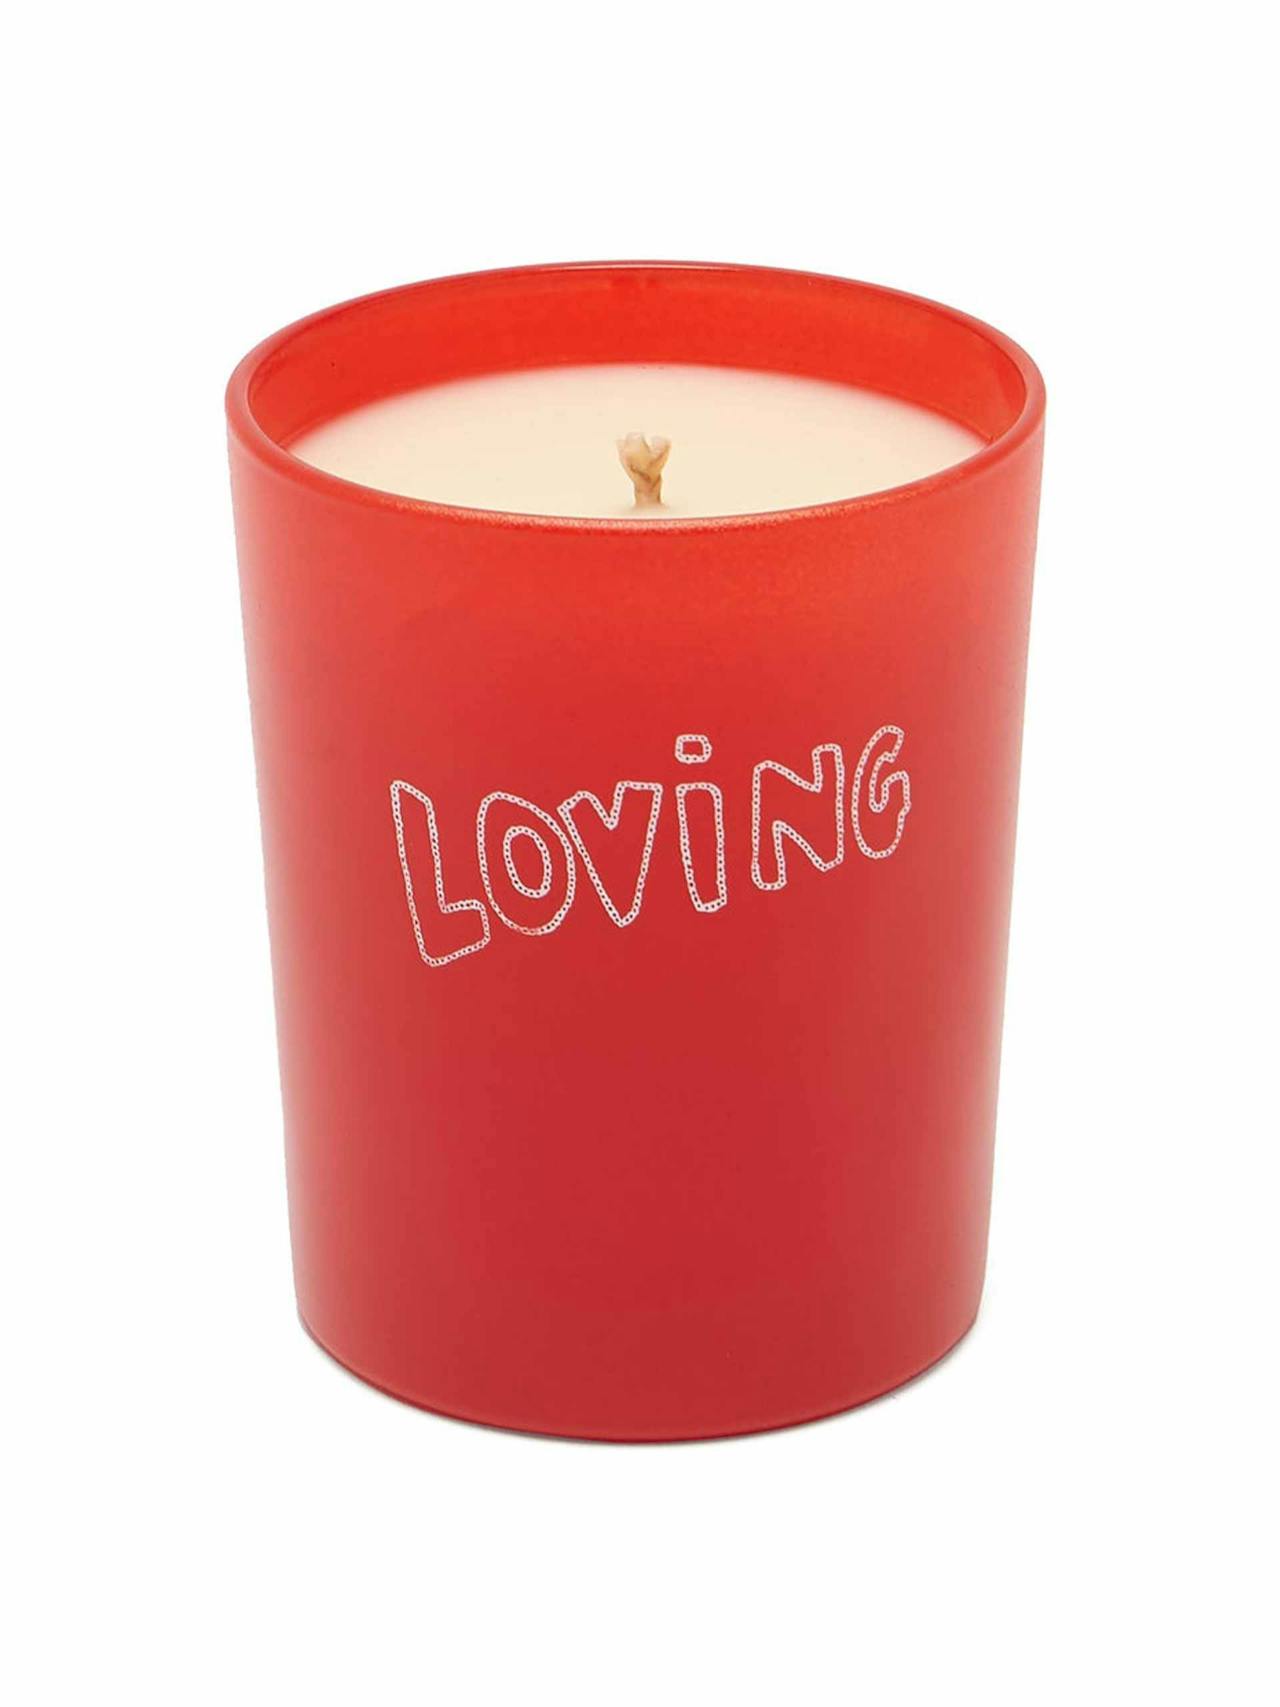 Loving candle